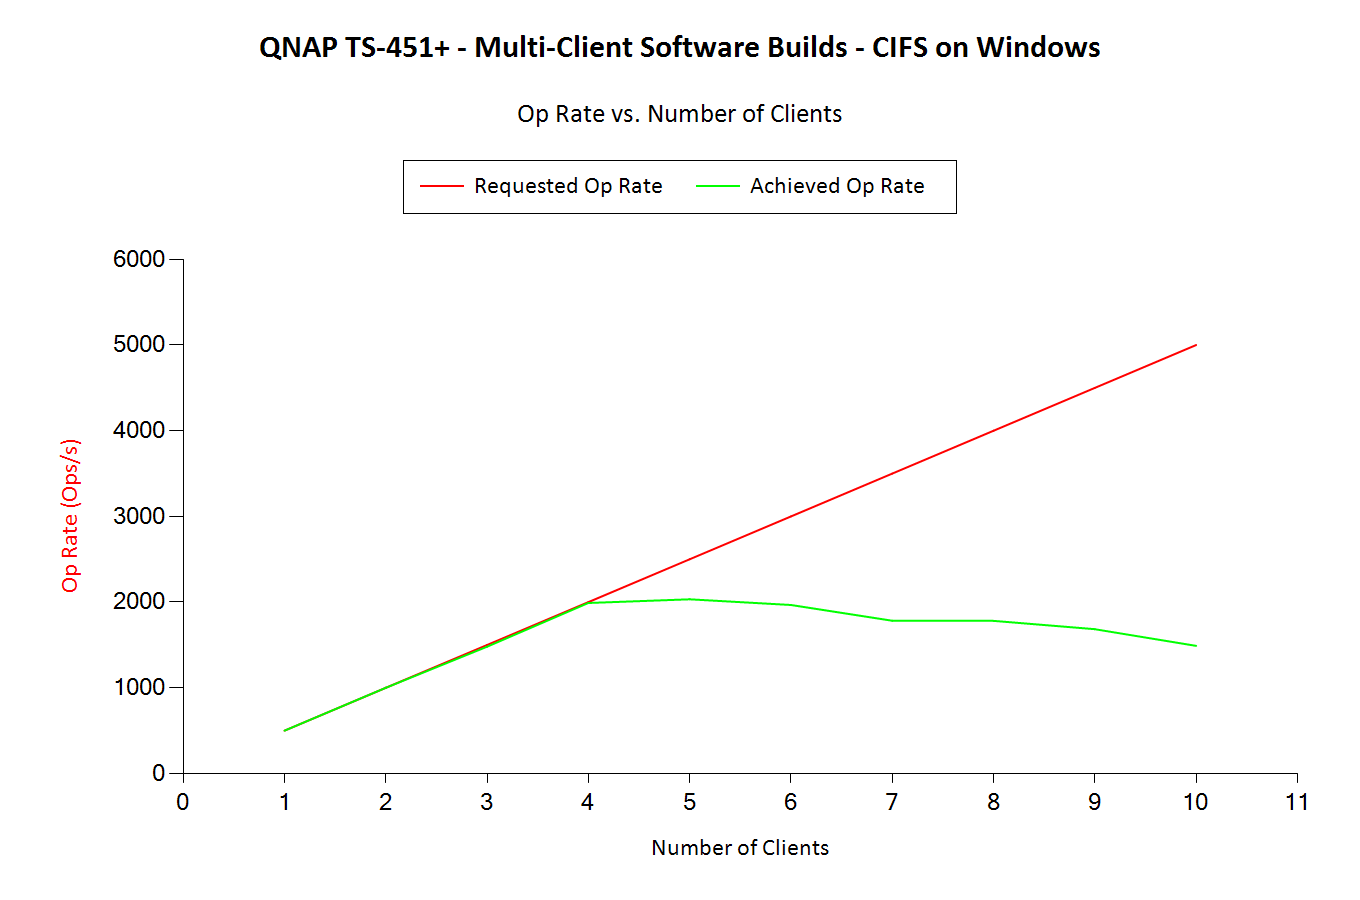 Software Builds - Op Rates